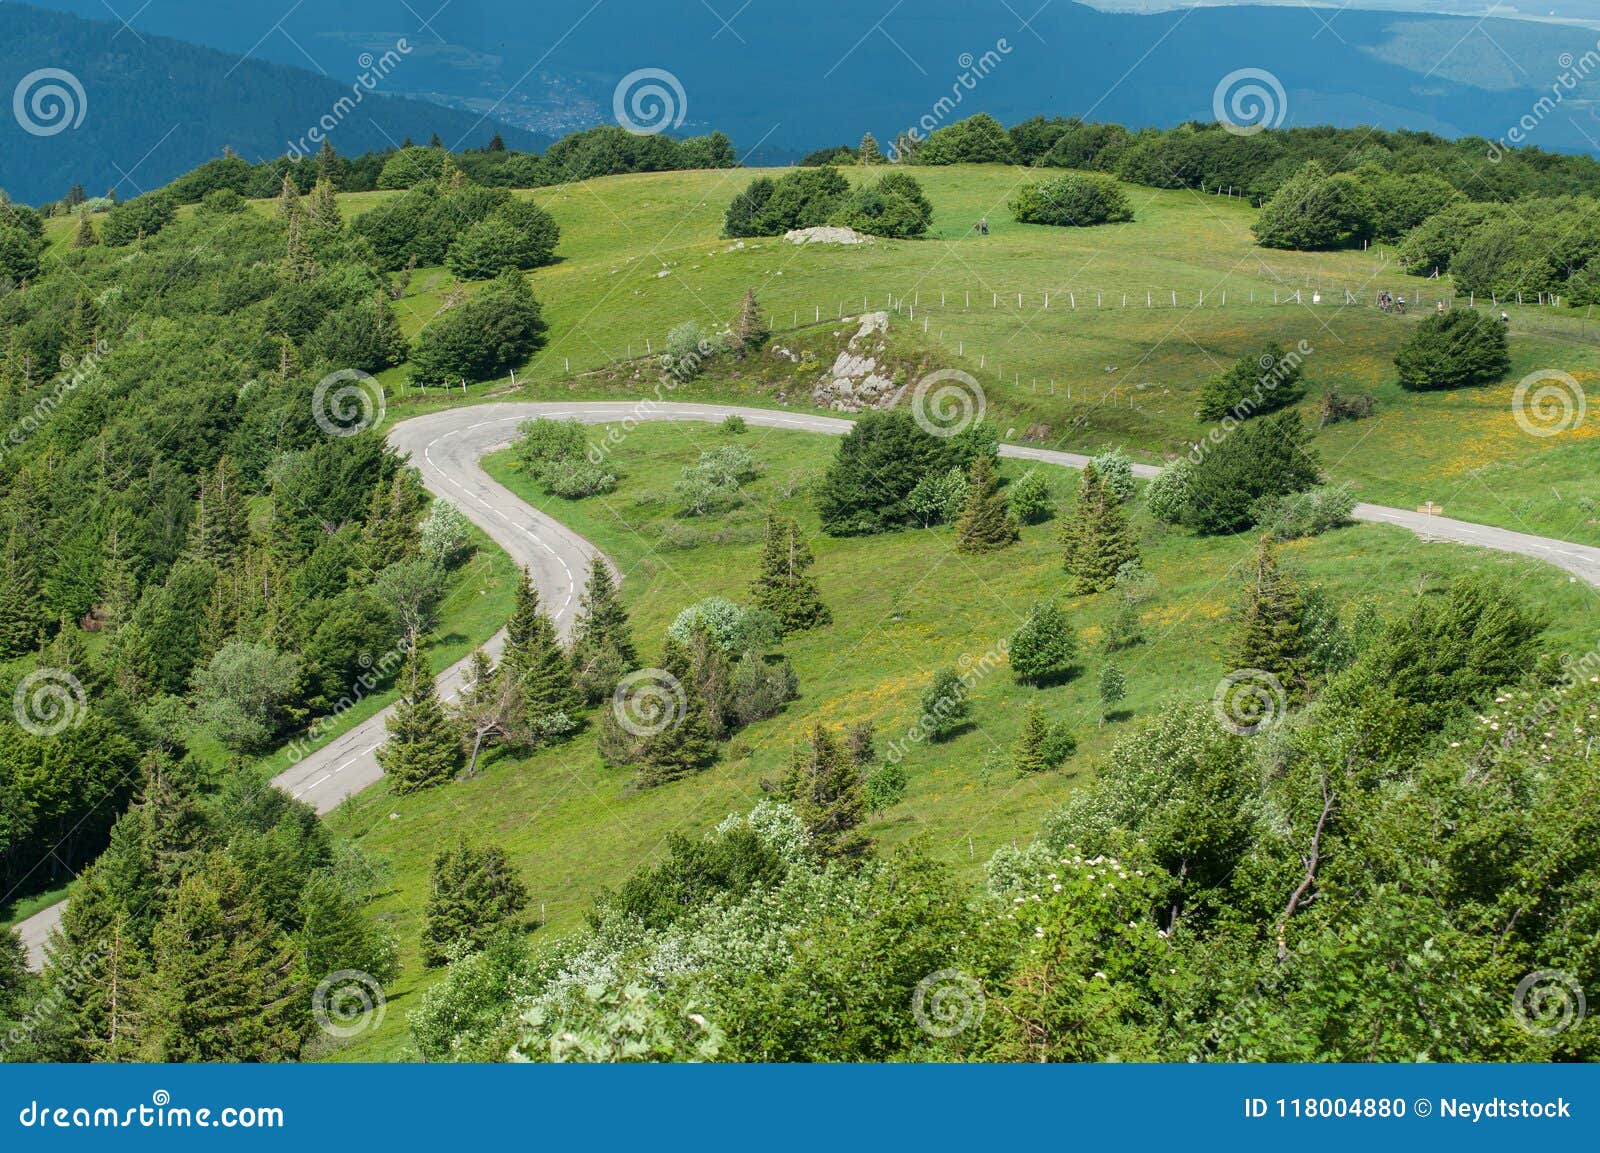 beautiful mountain laces road in top vieuw